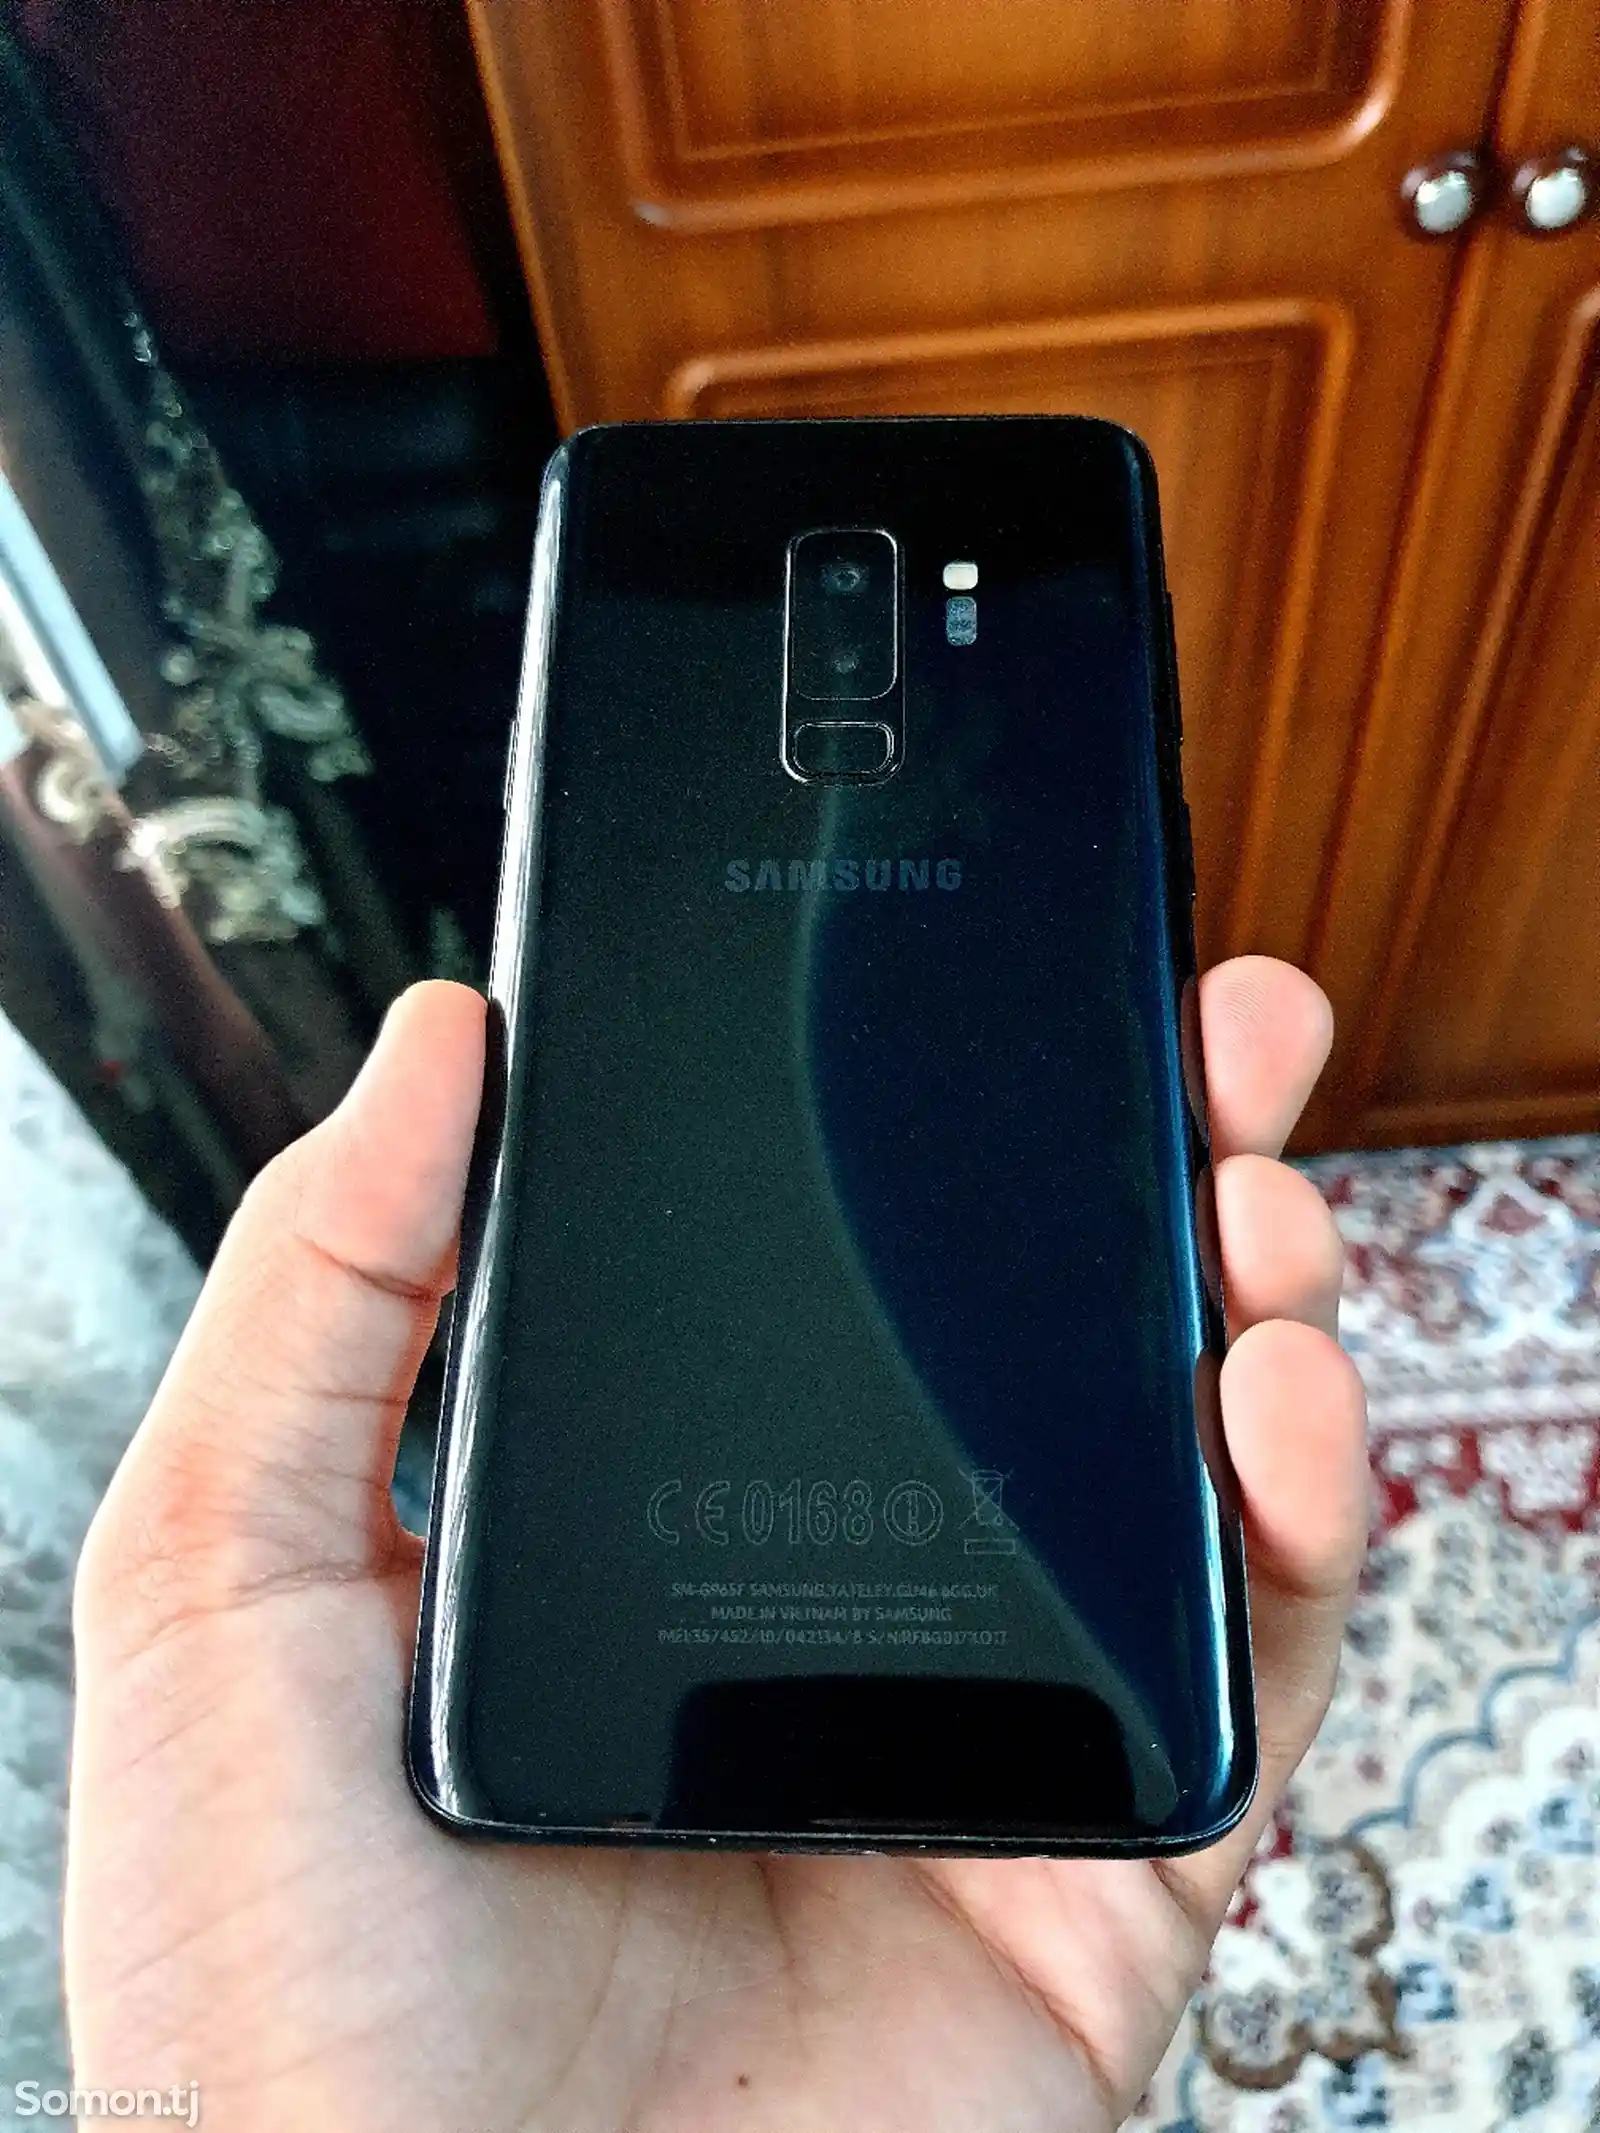 Samsung Galaxy S9+, 256 gb duos-3